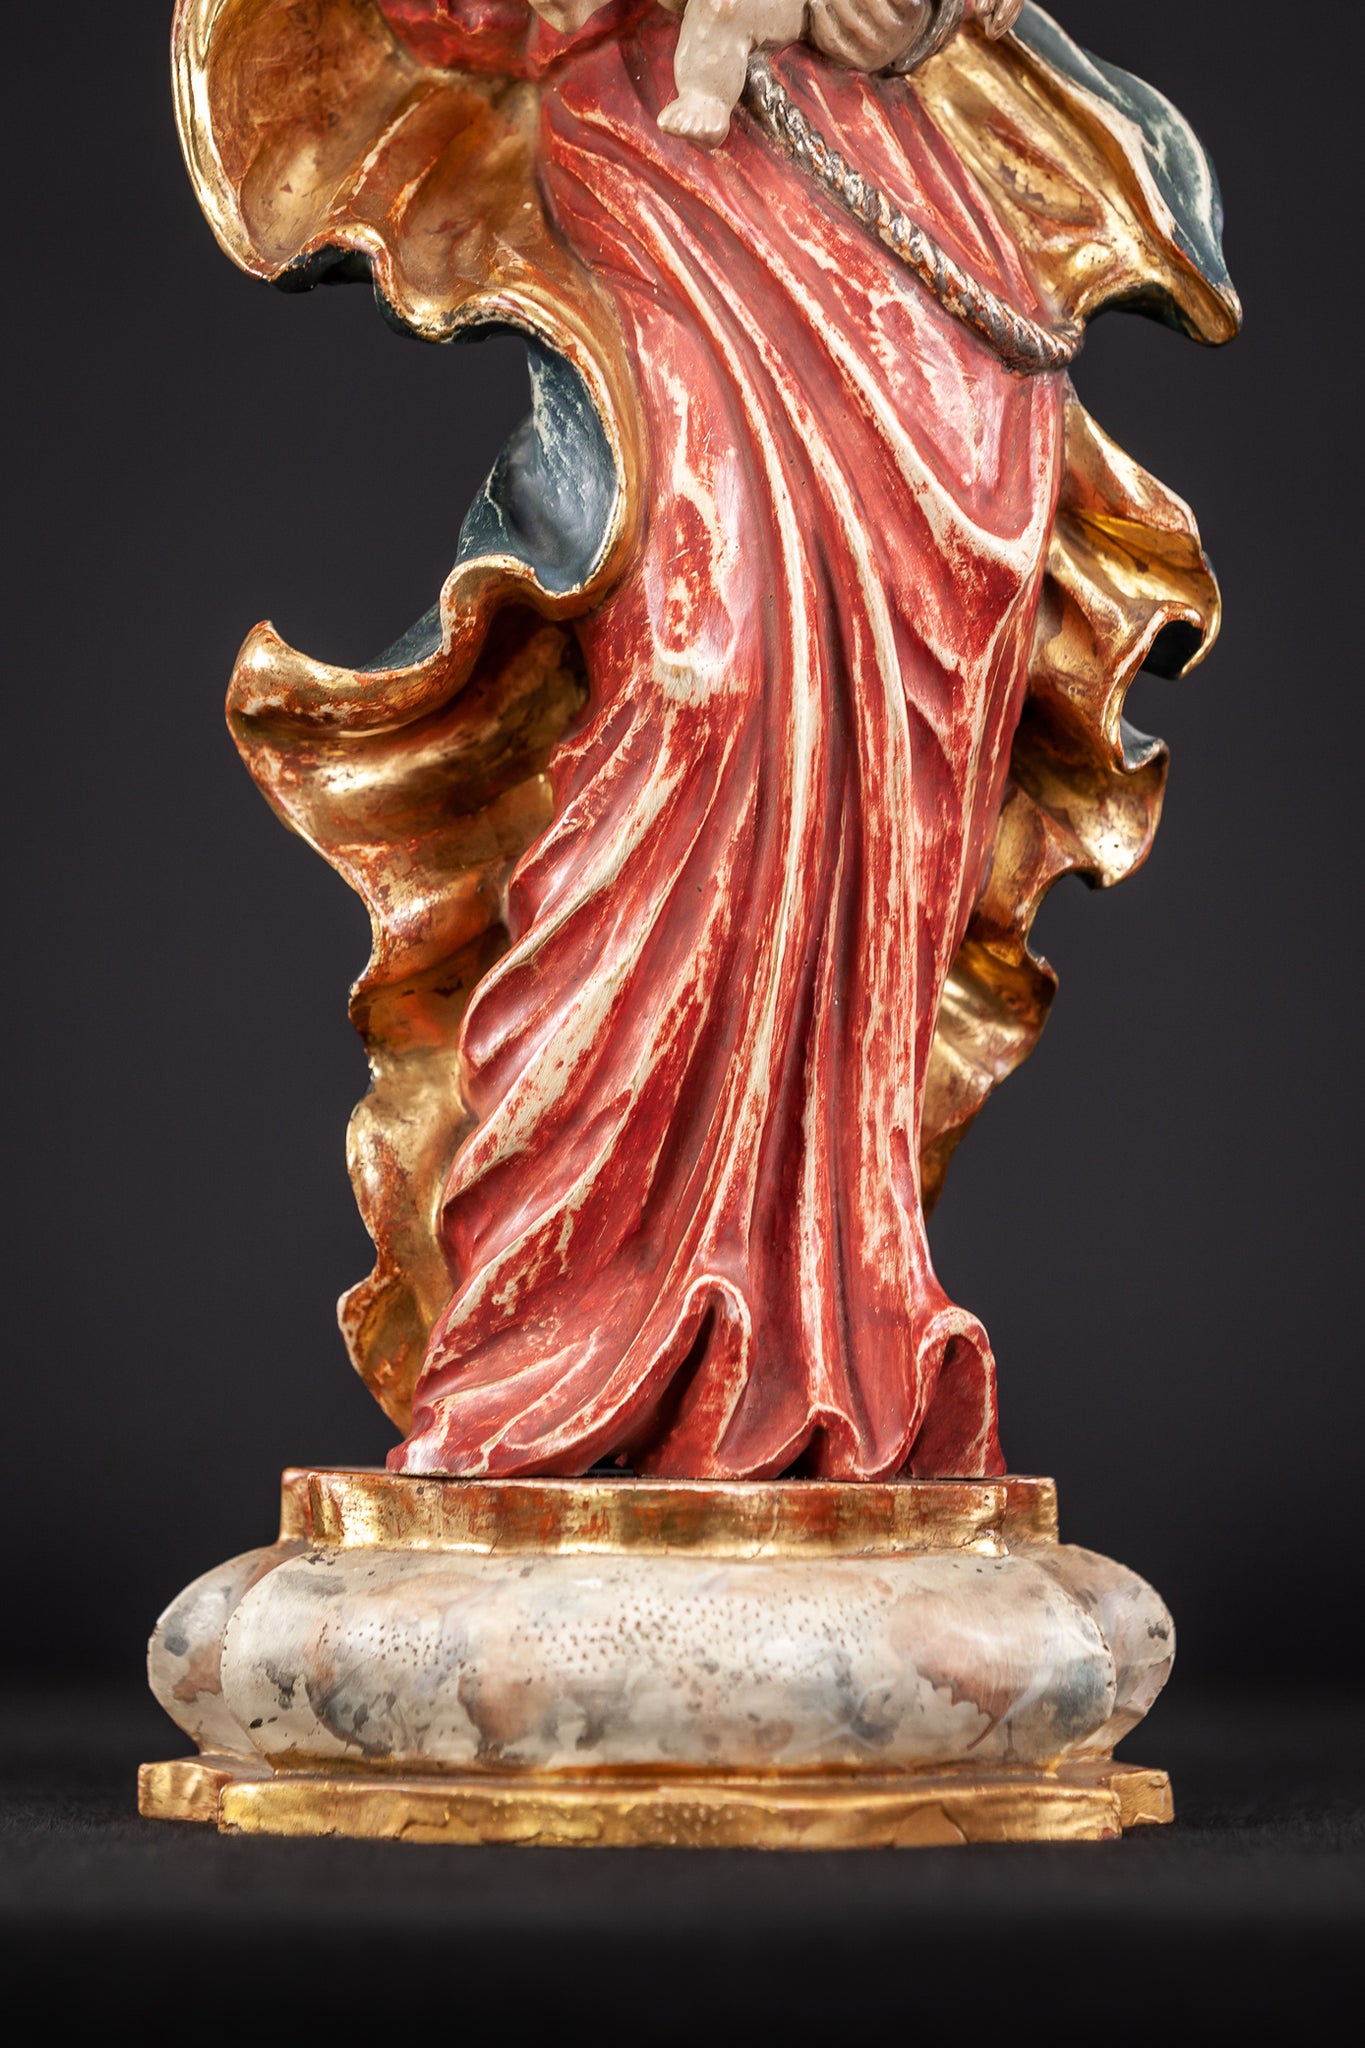 Virgin Mary Child Jesus Wooden Sculpture 19.7”